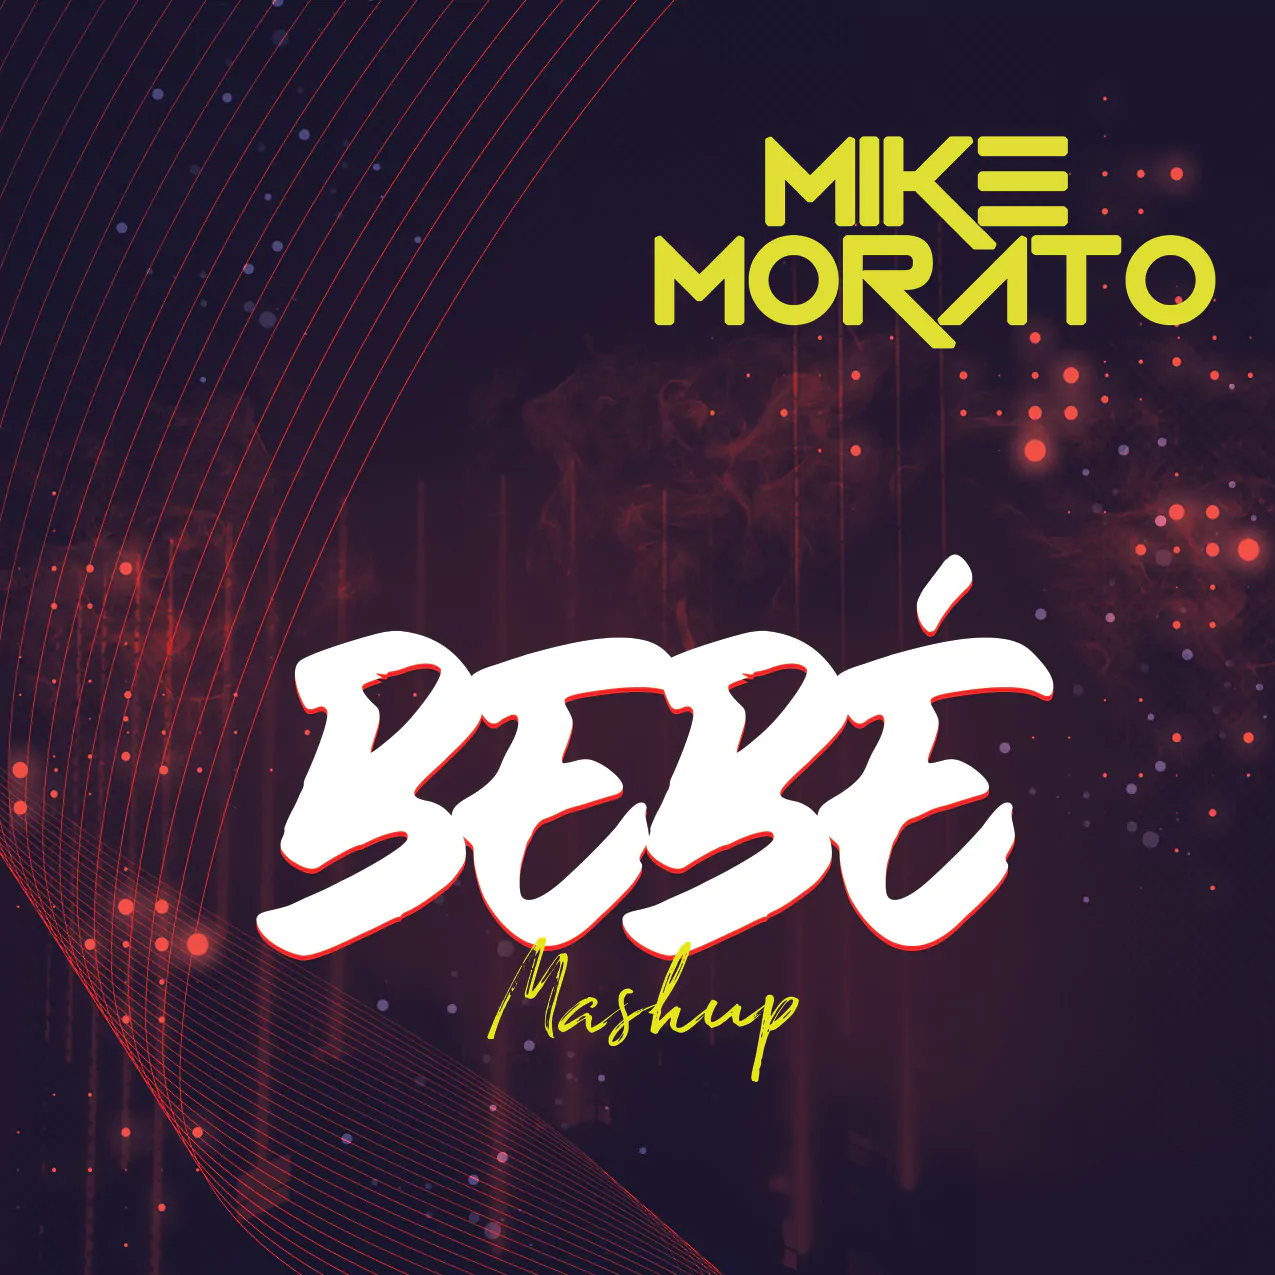 Mike Morato - Bebe (Mashup)